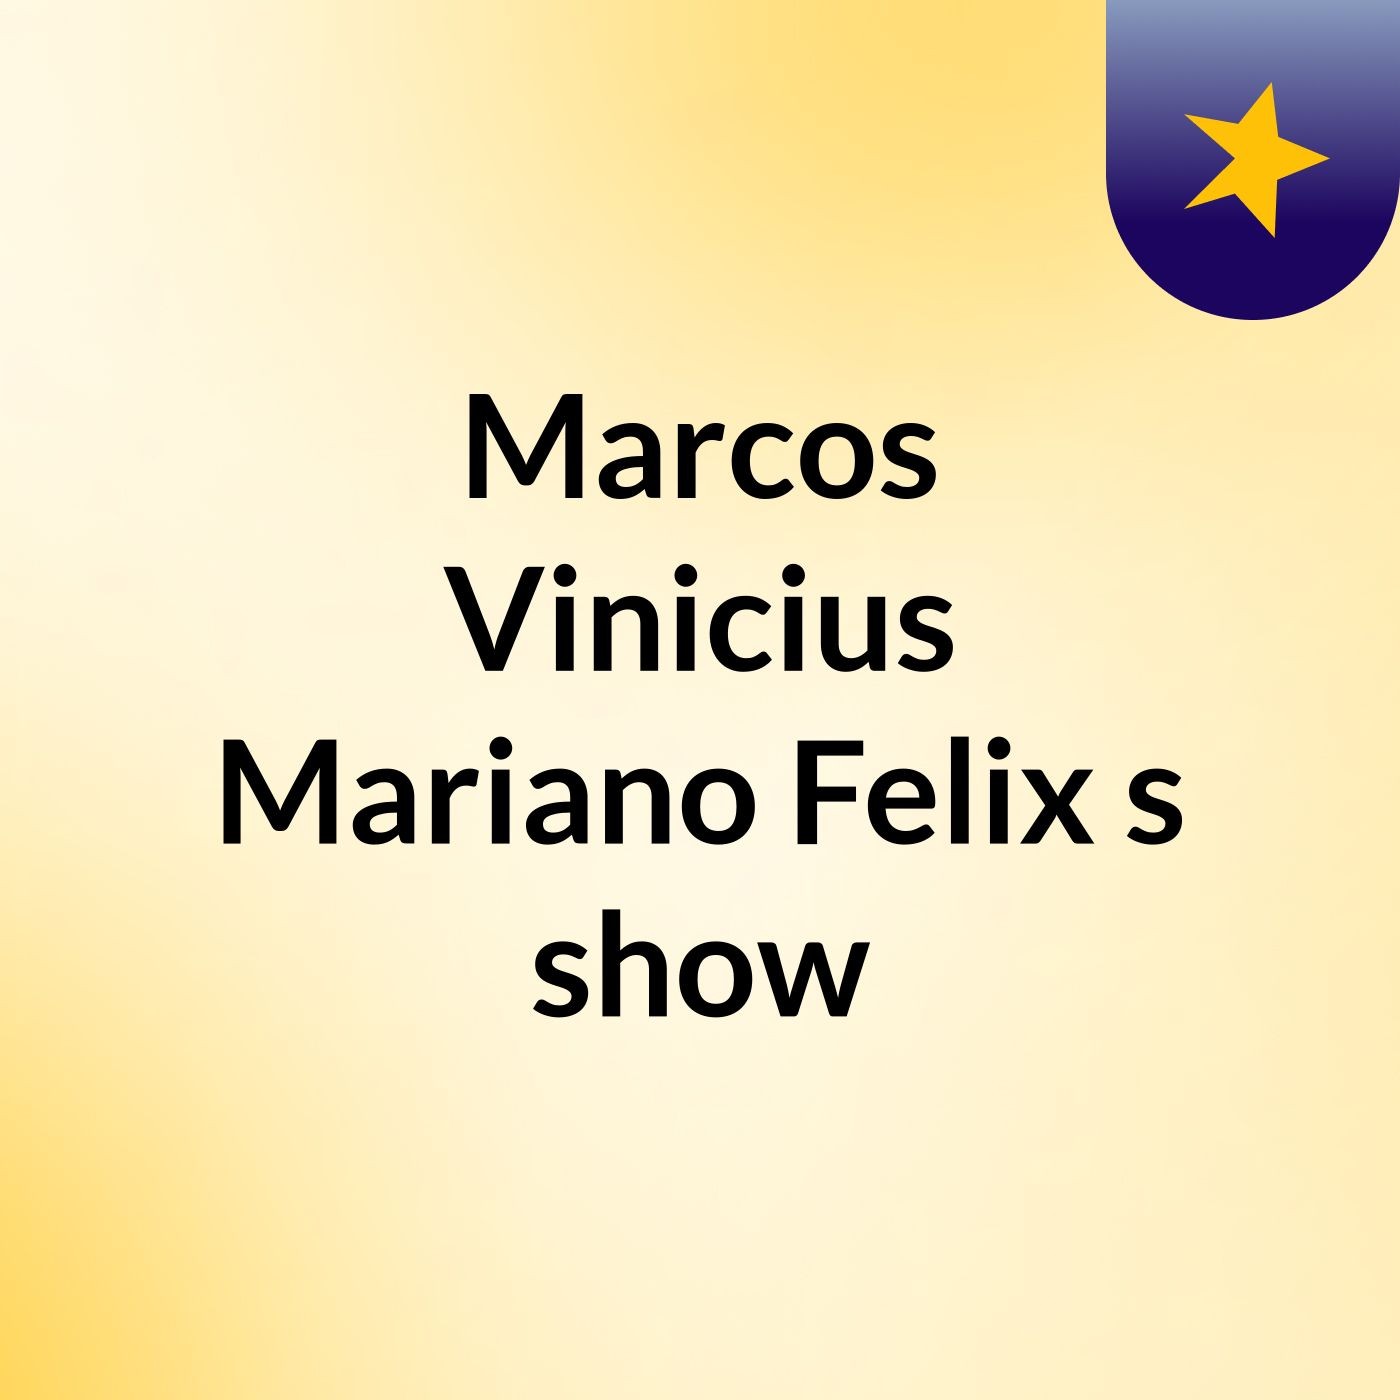 Marcos Vinicius Mariano Felix's show